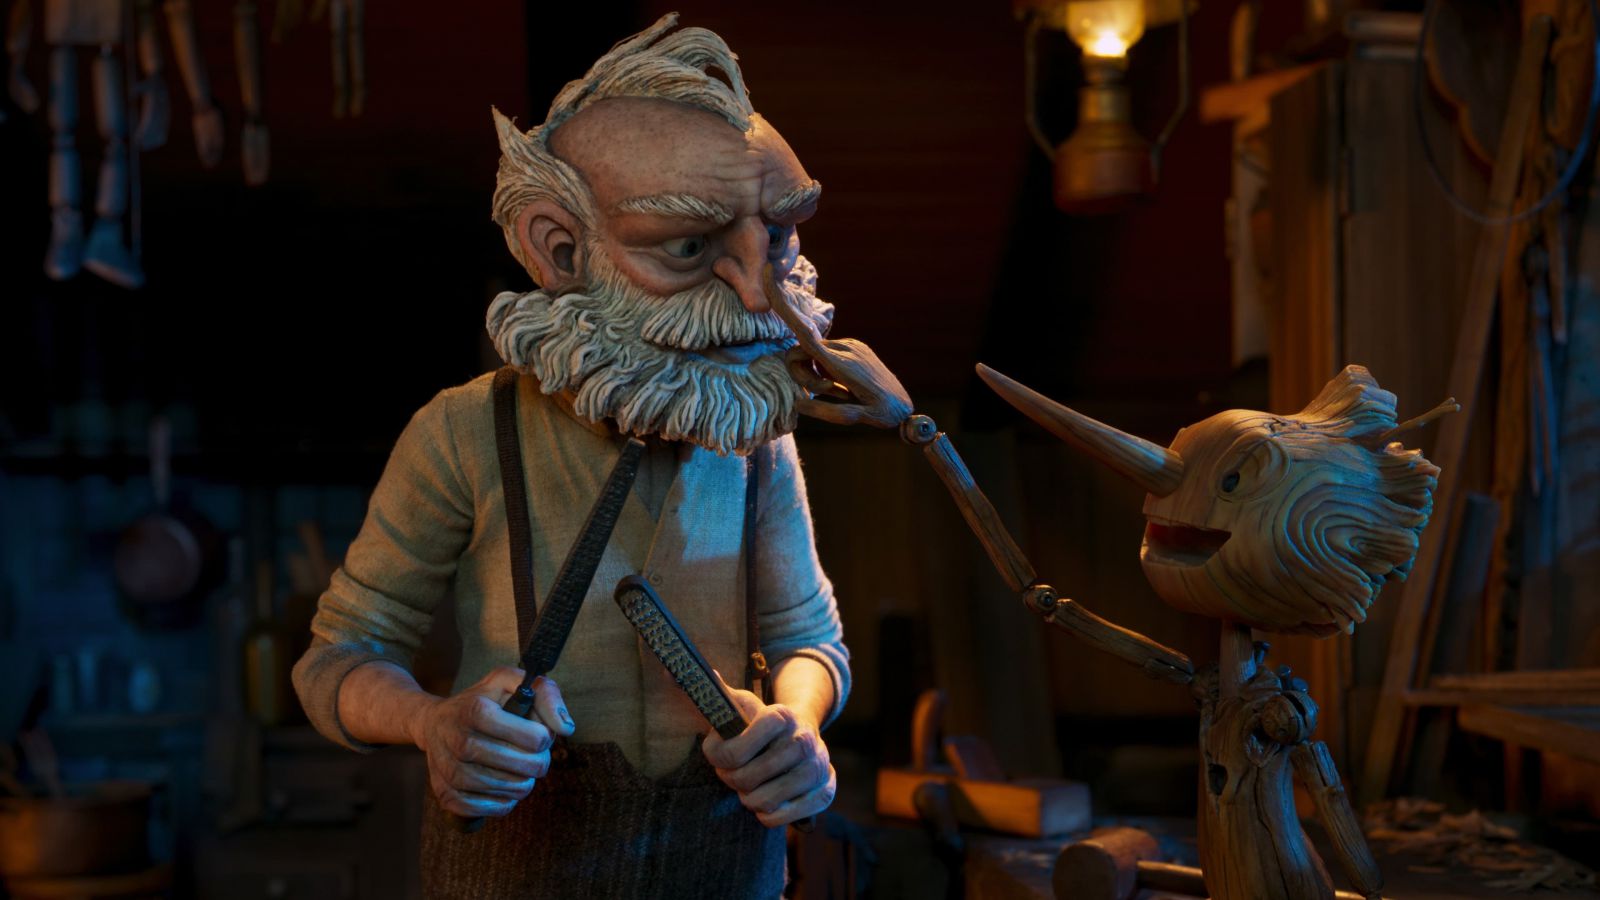 Watch Movie Guillermo del Toro’s Pinocchio (2022) Full Movie Full HD Free Online